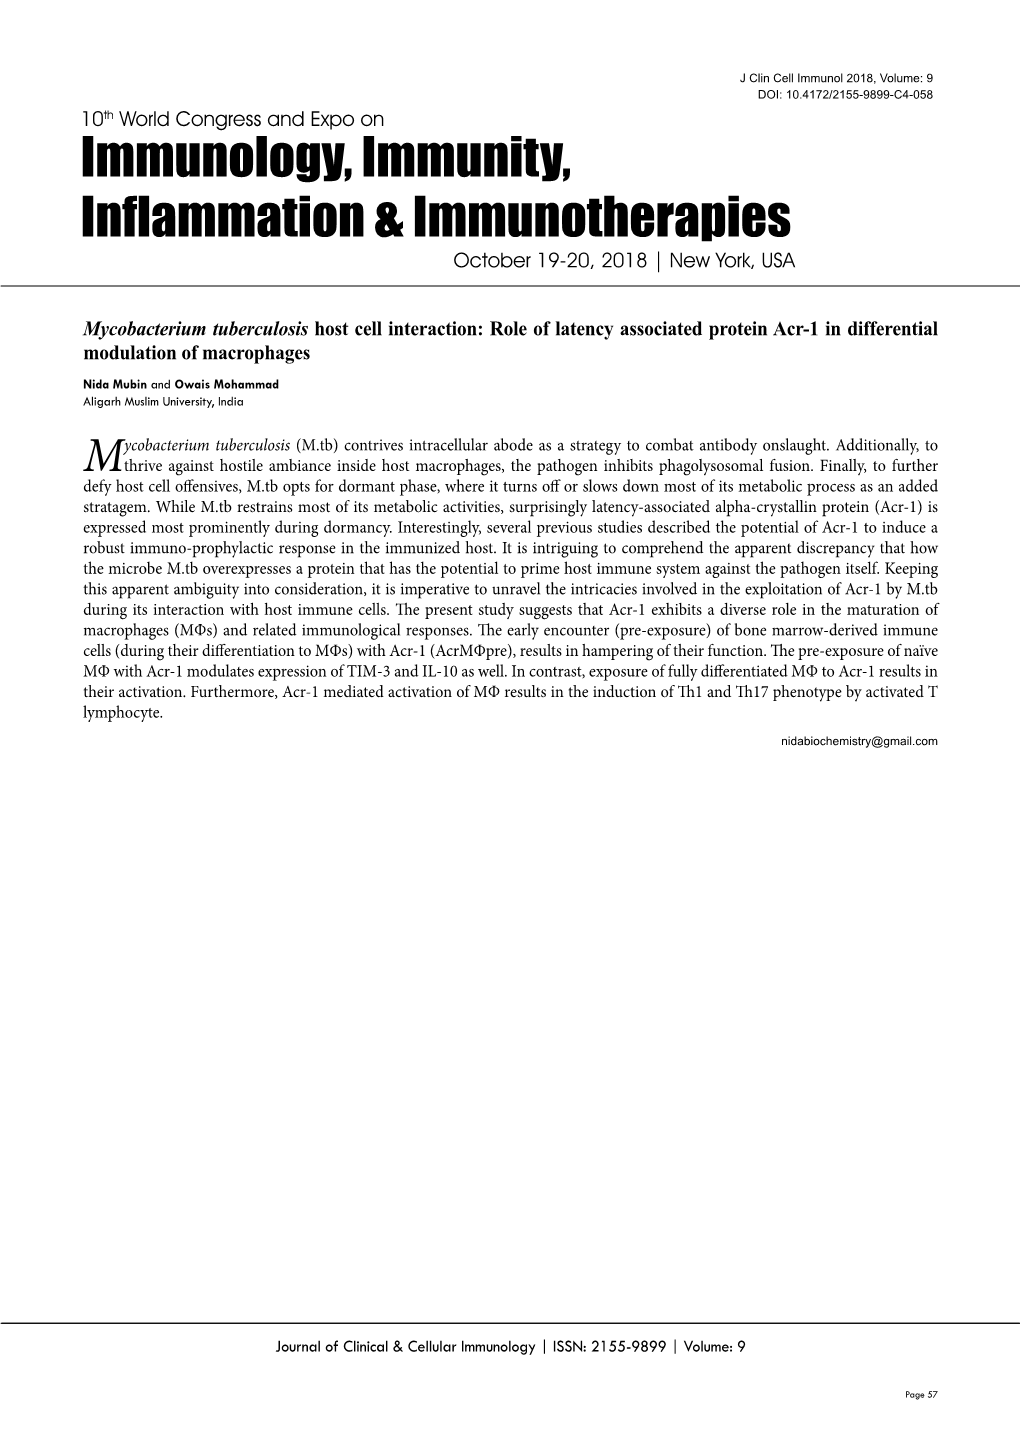 Immunology, Immunity, Inflammation & Immunotherapies